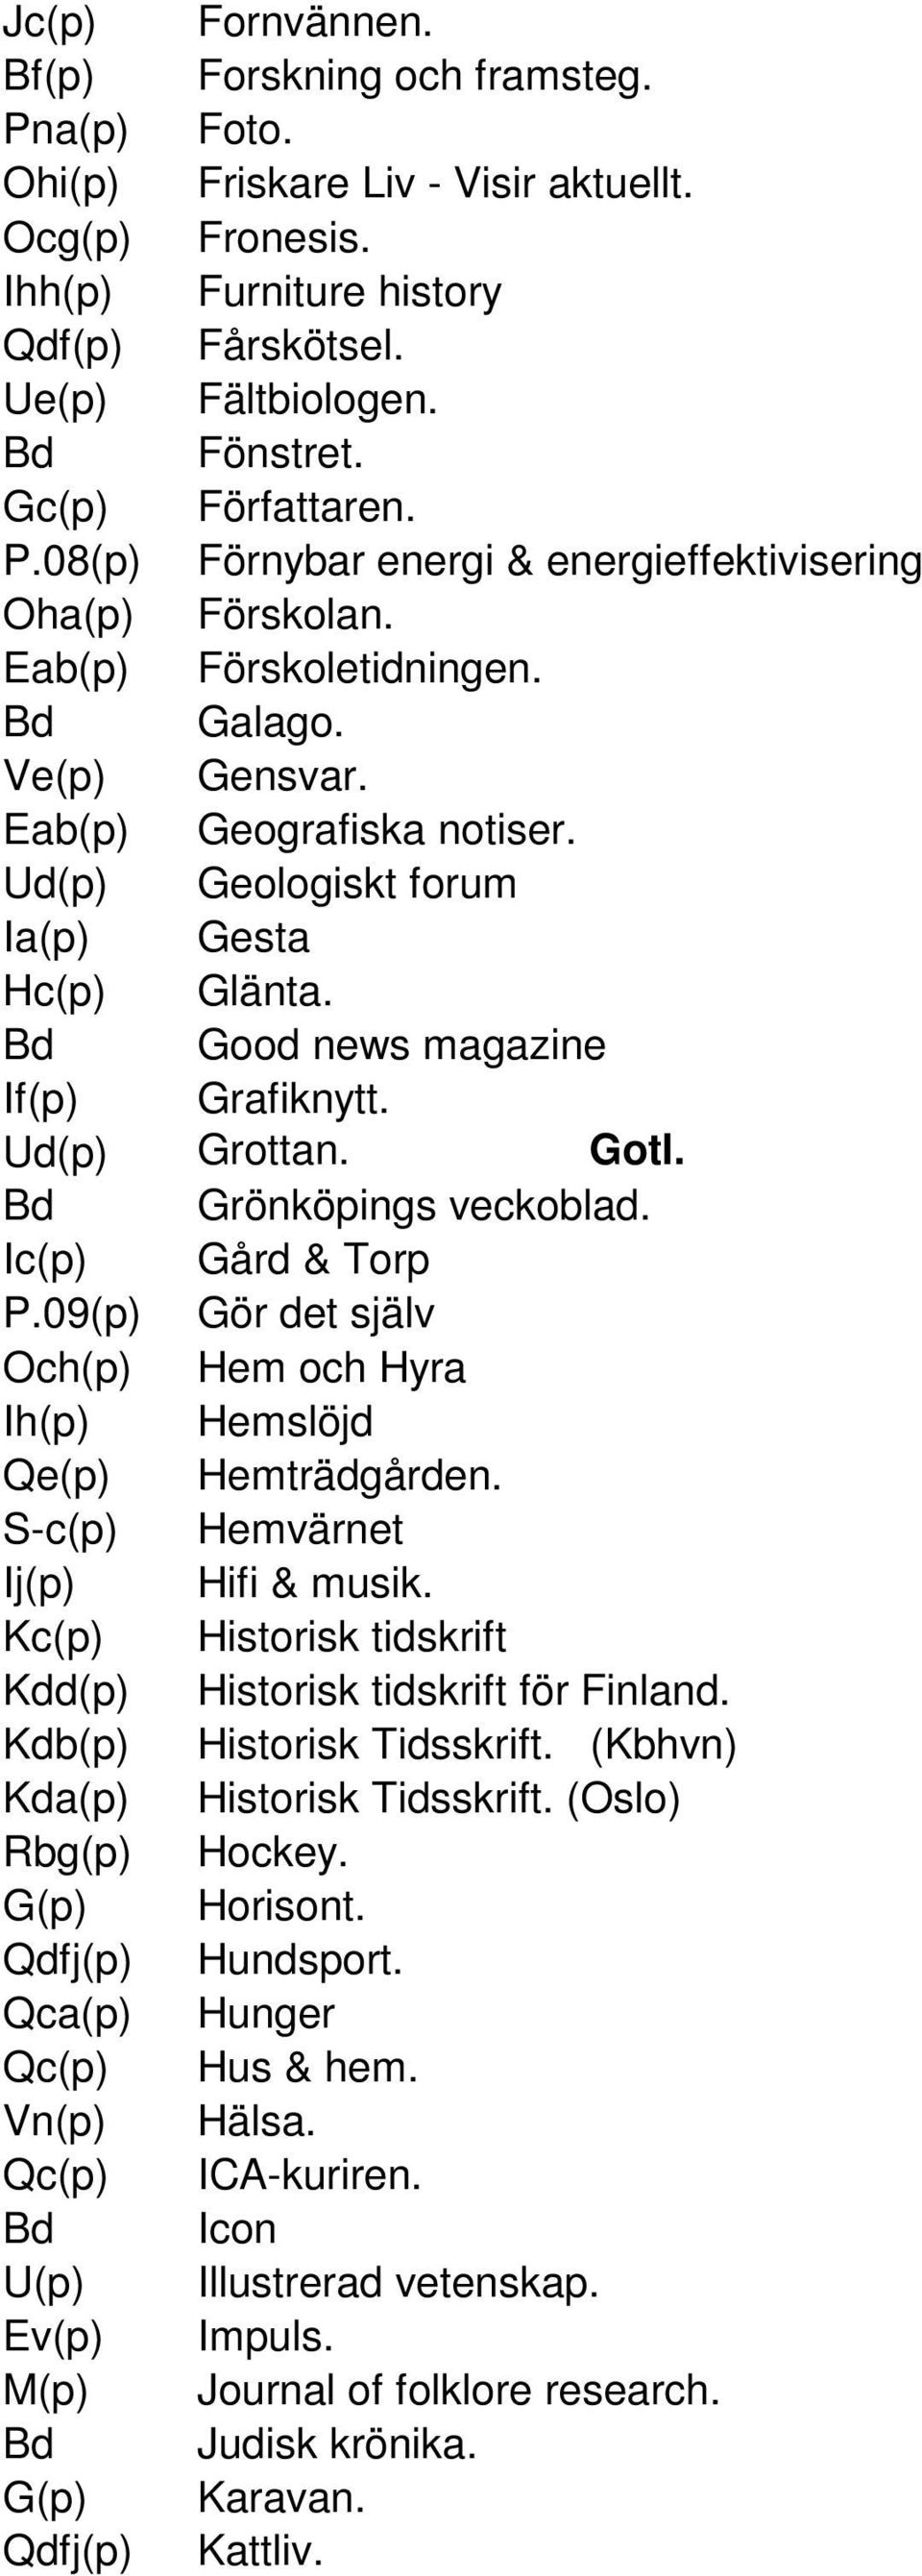 Ud(p) Geologiskt forum Ia(p) Gesta Hc(p) Glänta. Good news magazine If(p) Grafiknytt. Ud(p) Grottan. Gotl. Grönköpings veckoblad. Ic(p) Gård & Torp P.